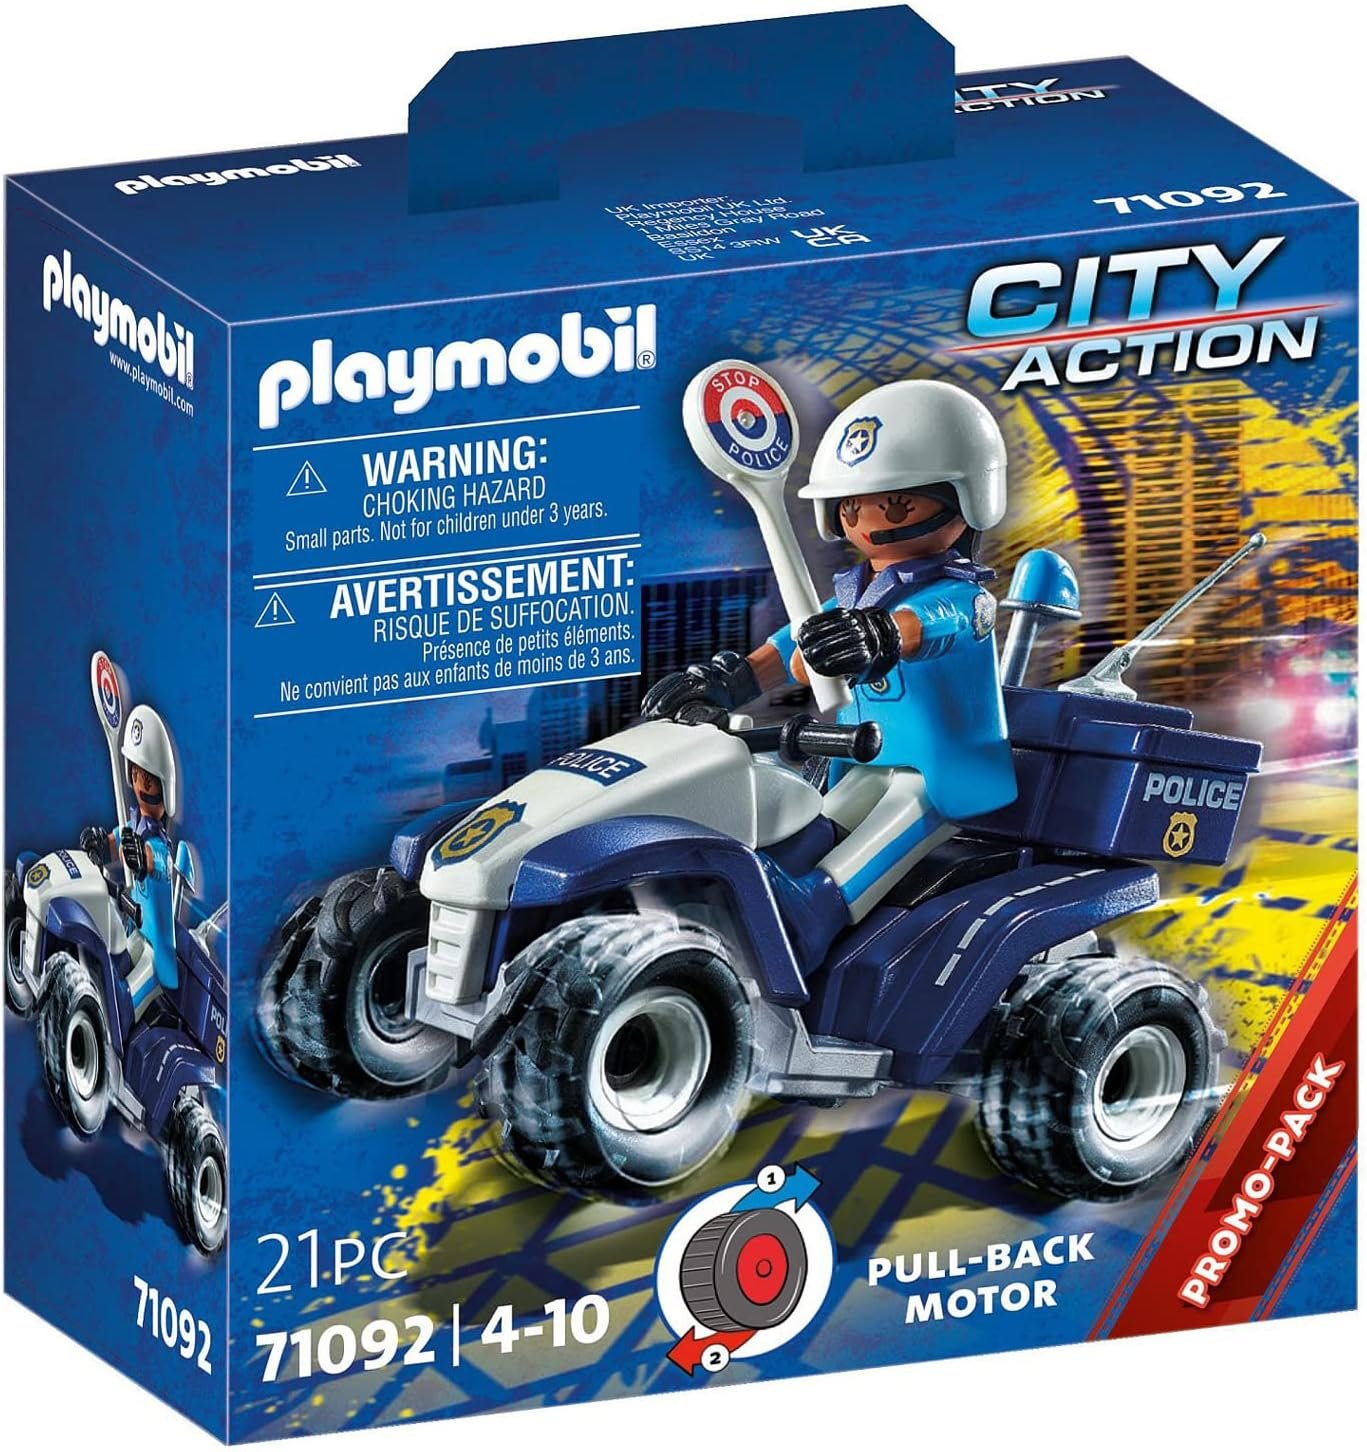 Playmobil City Action () Polizei Speed Quad Mit Rückzugsmotor